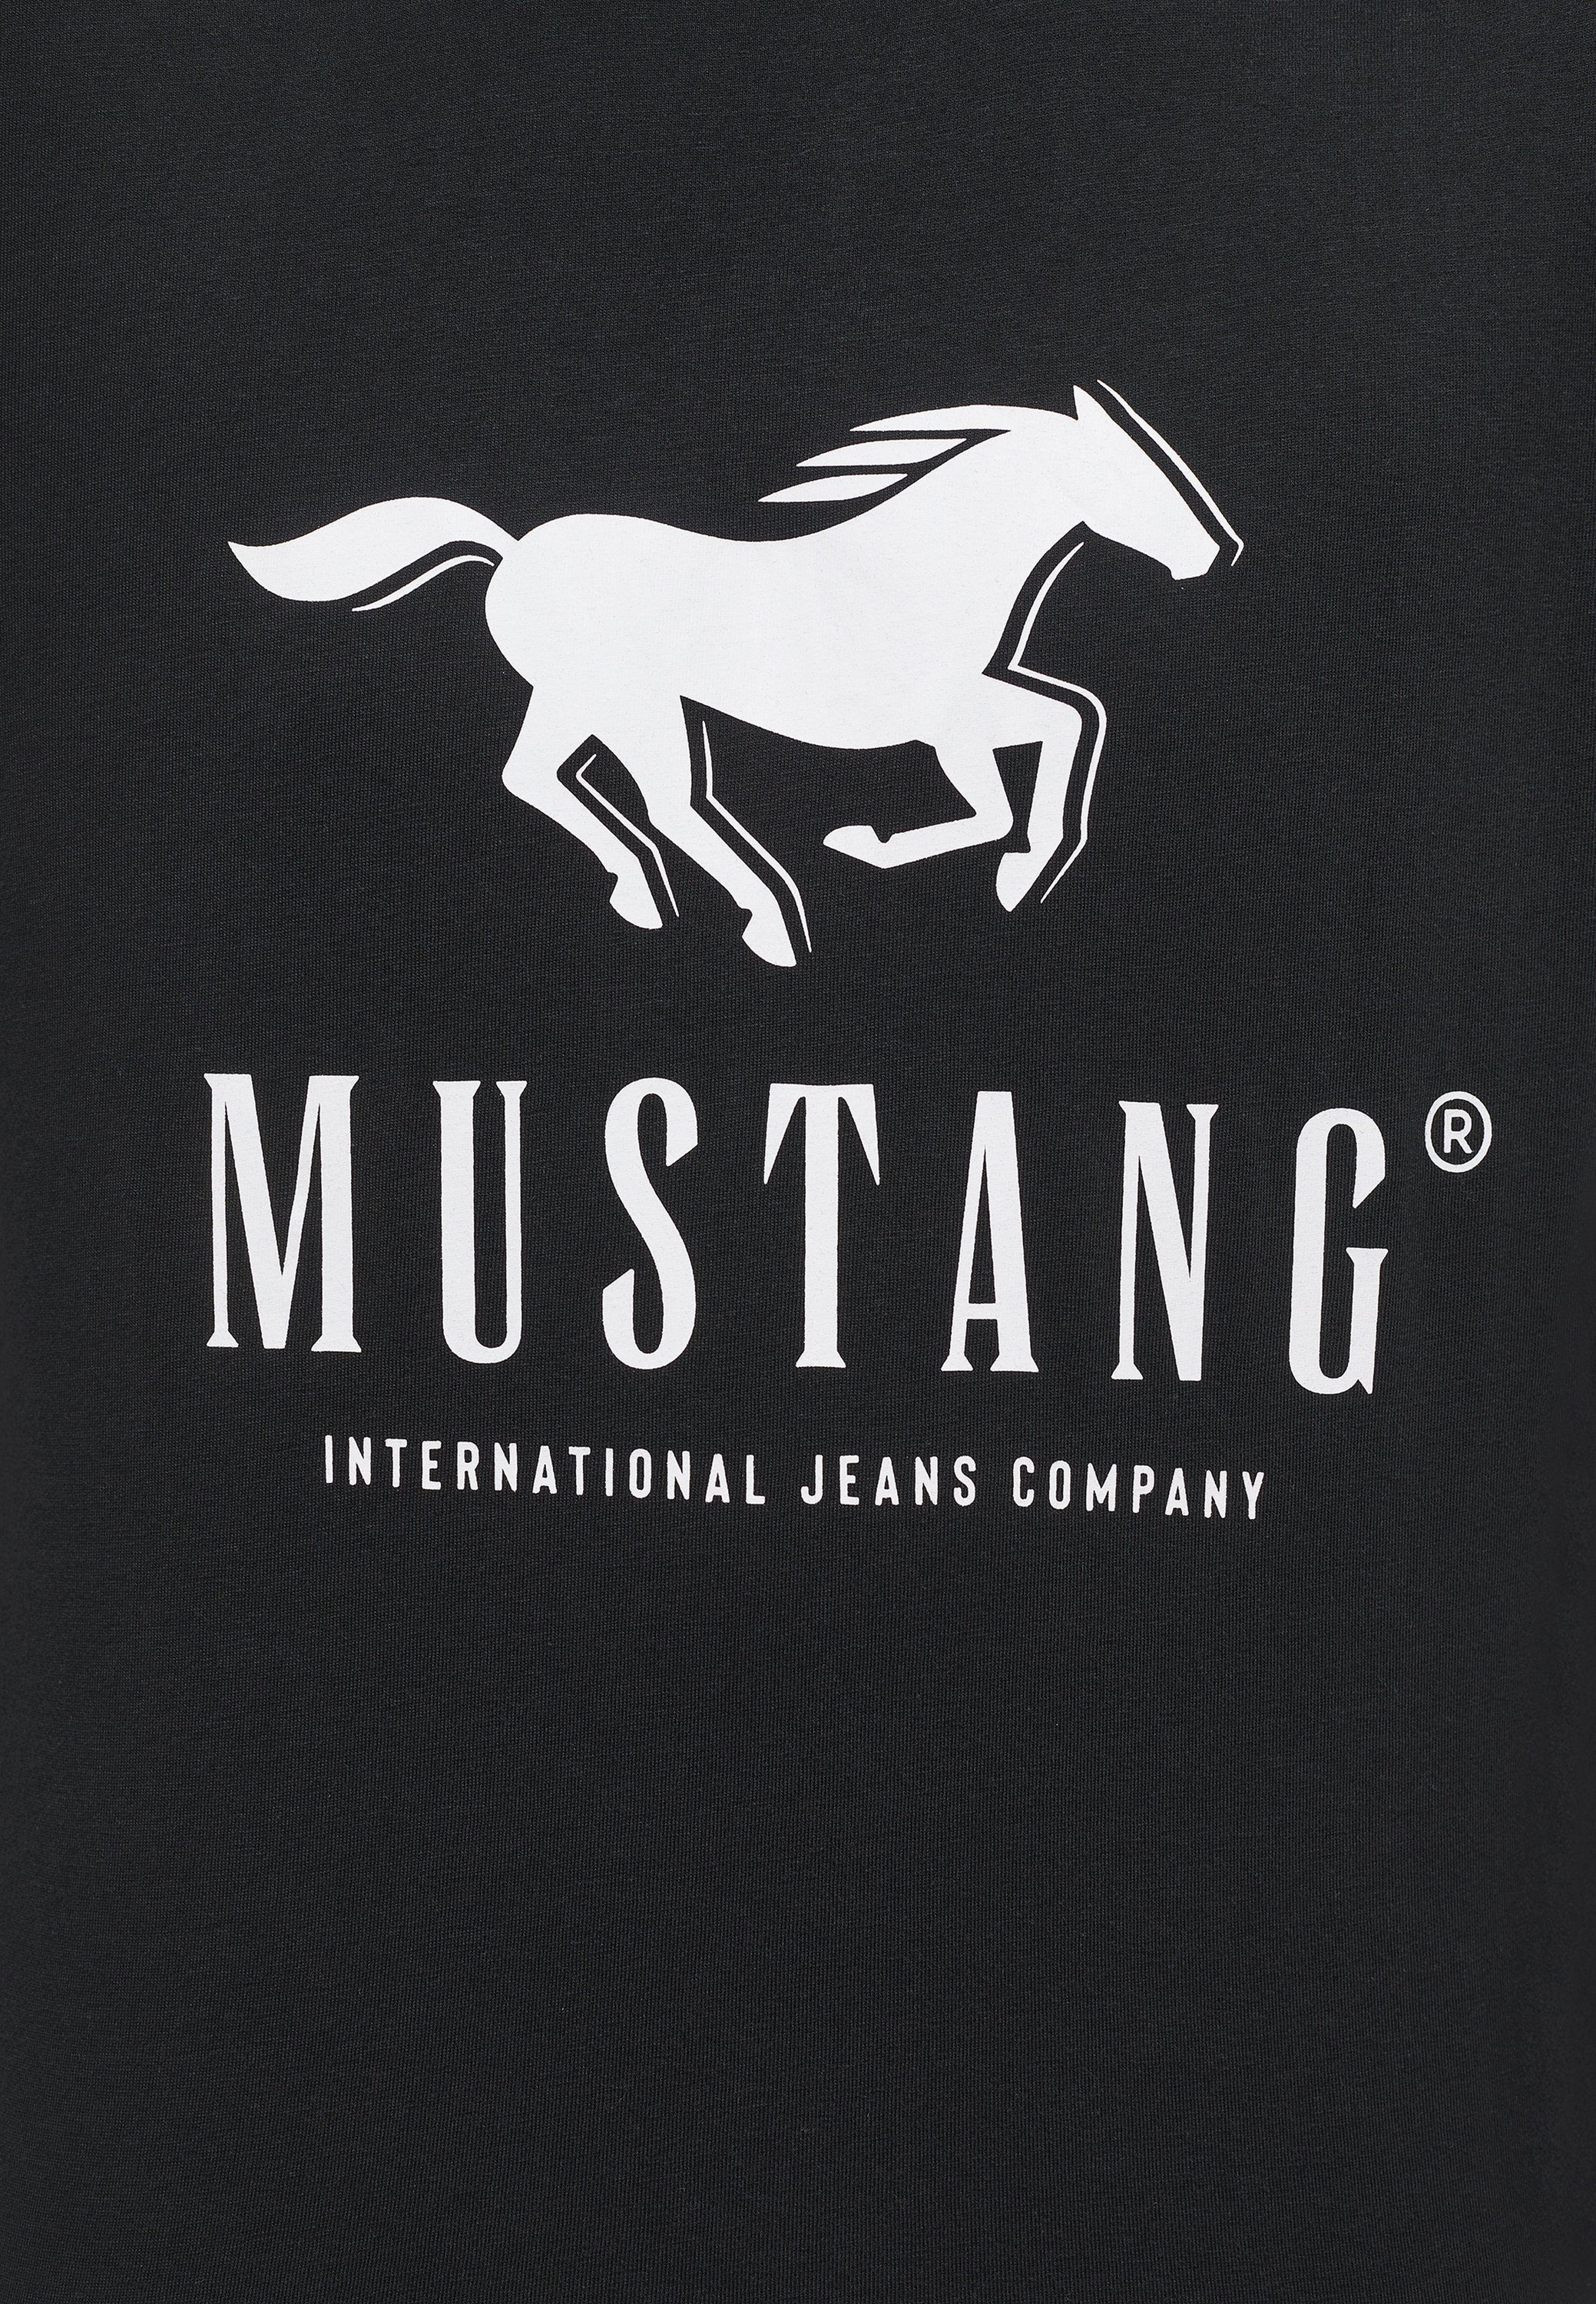 MUSTANG Mustang schwarz Kurzarmshirt Print-Shirt